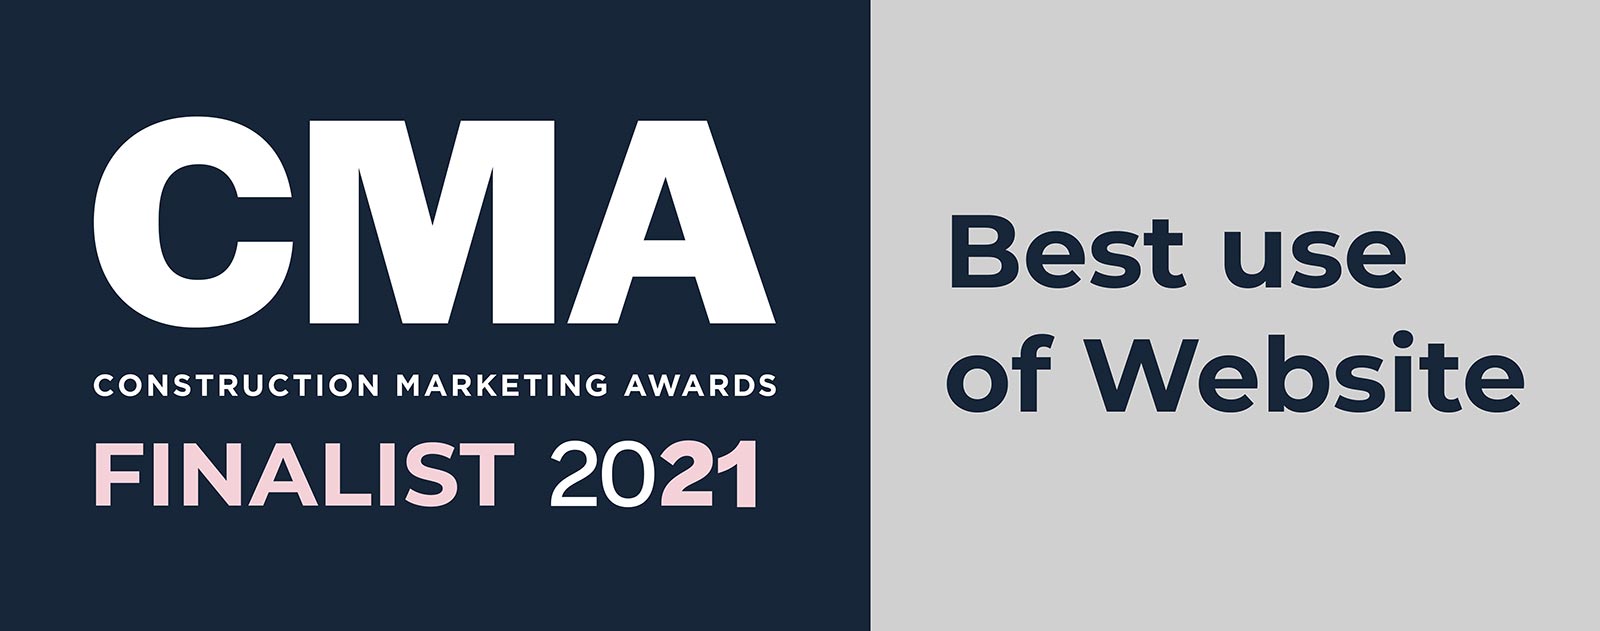 CMA Awards Finalist 2021 - Best use of Website